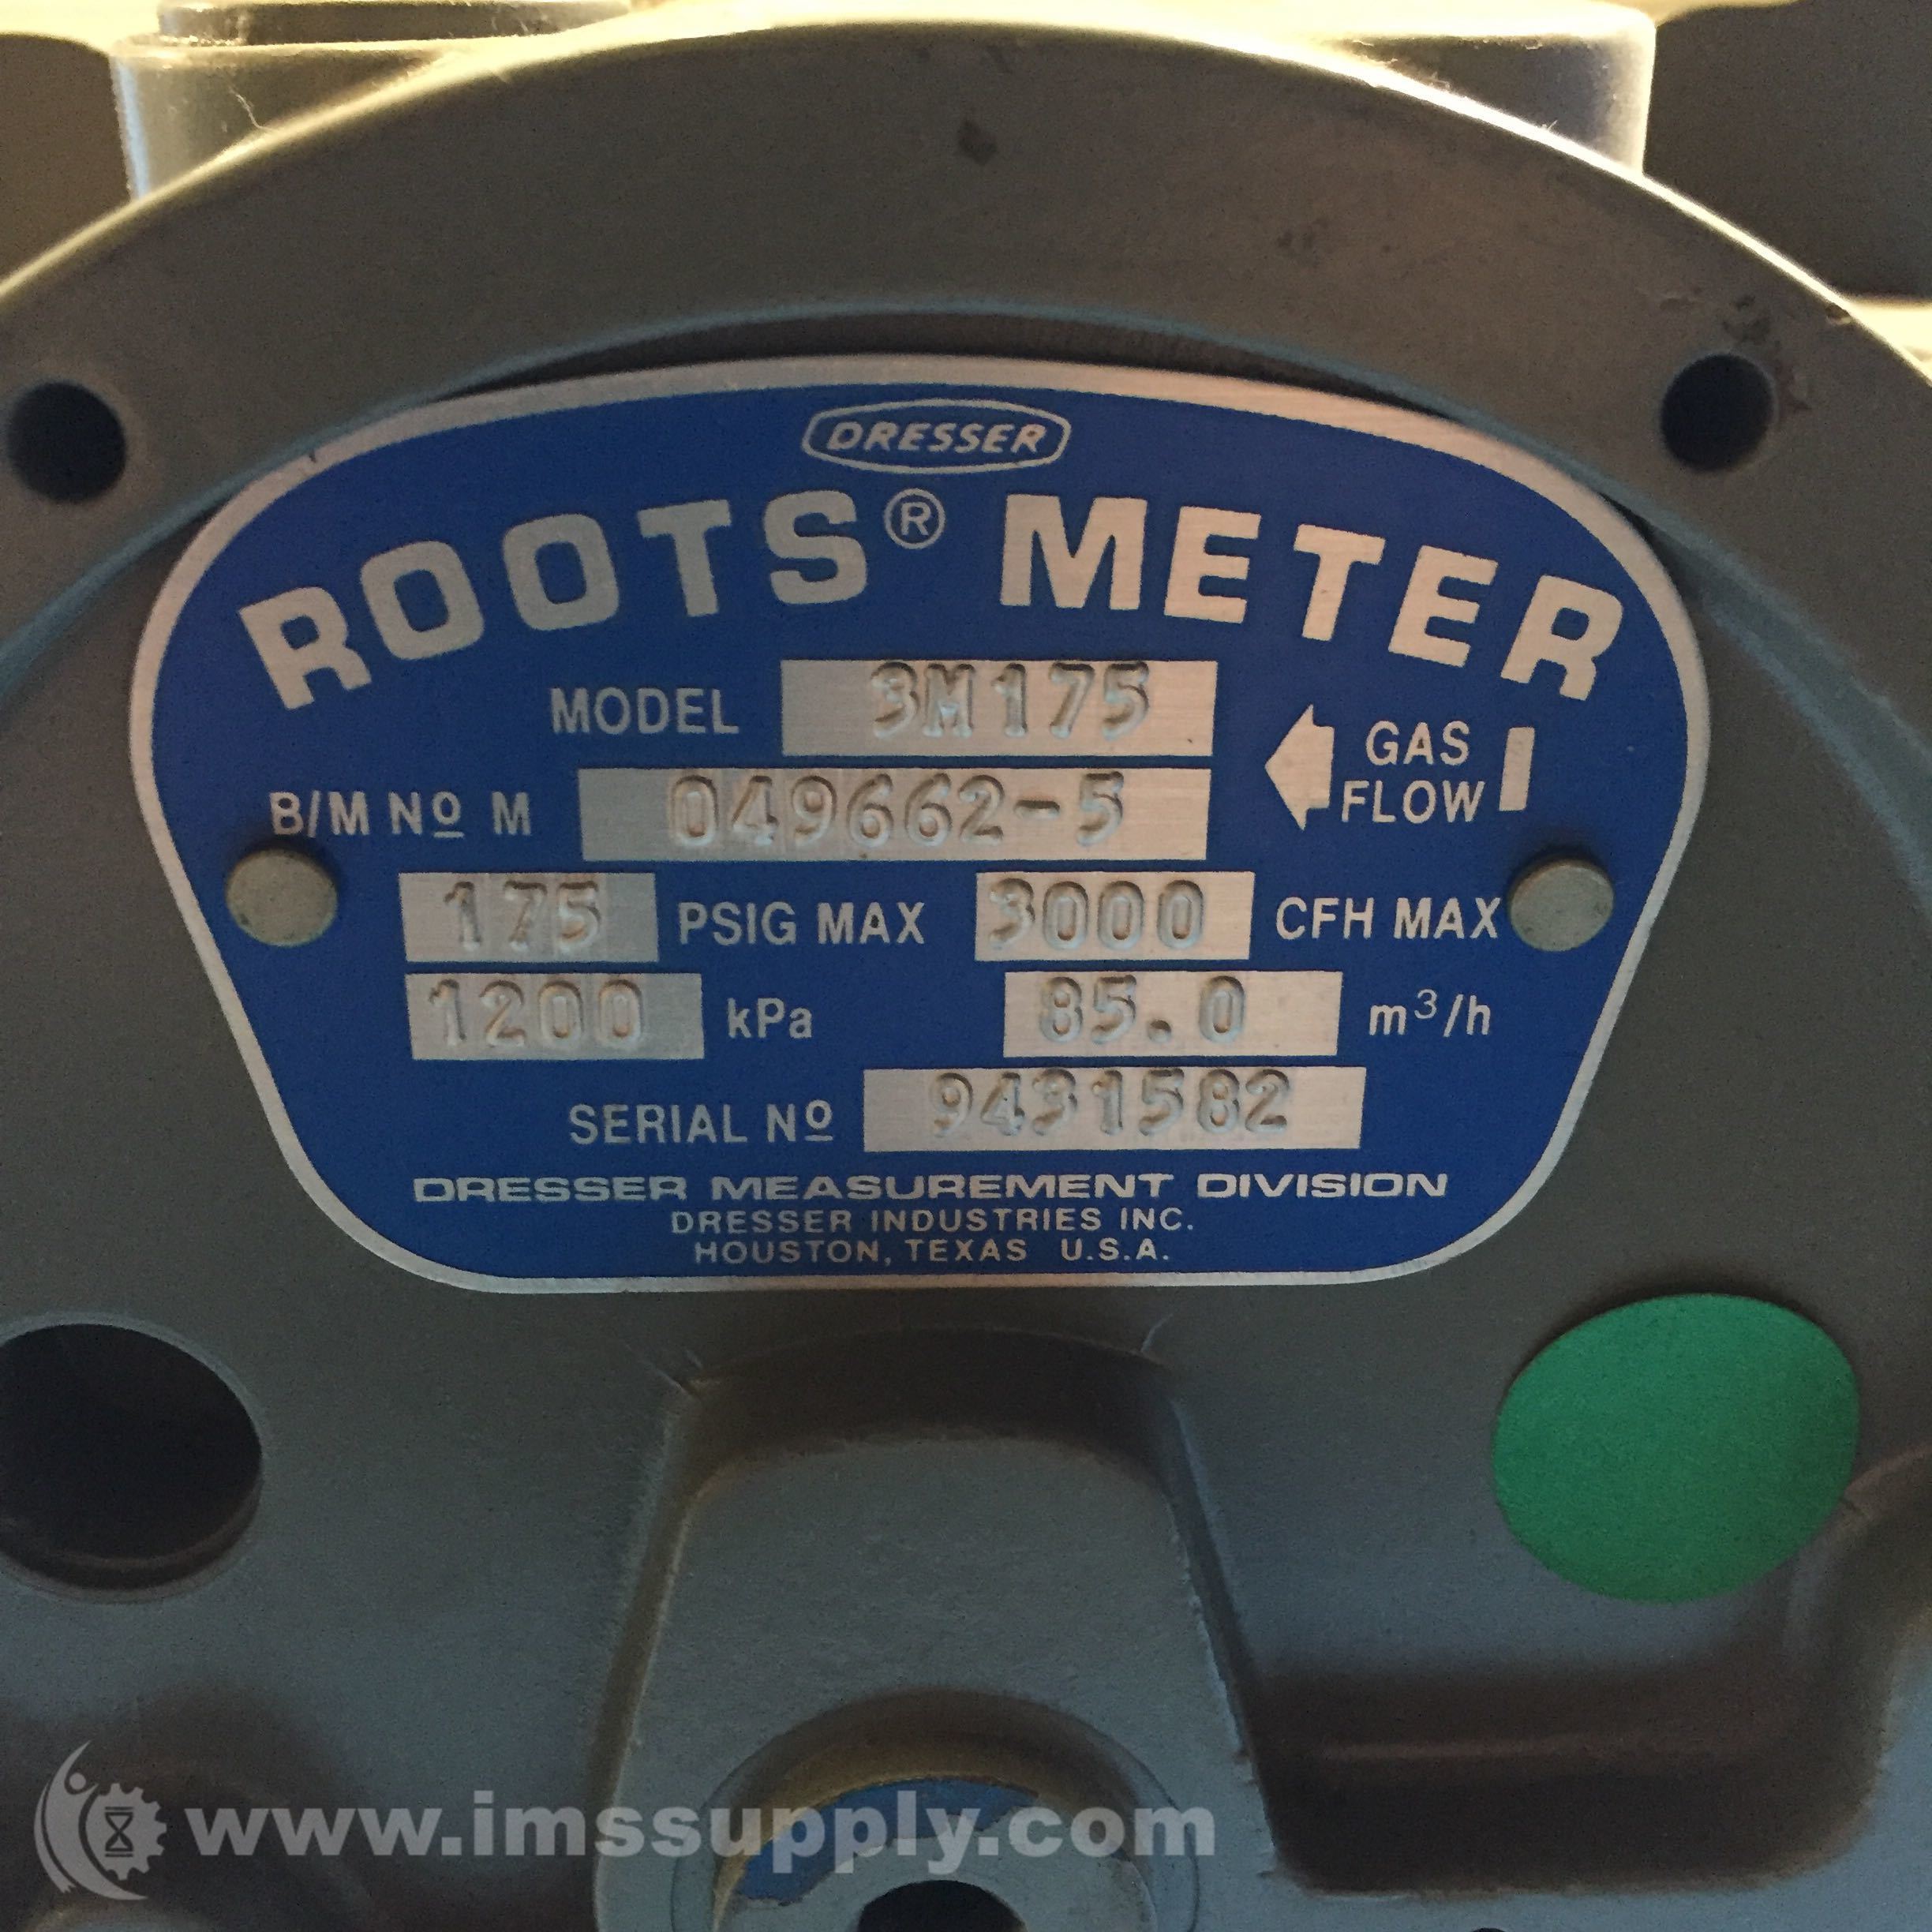 Dresser 3M175 049662-5 Roots Rotary Gas Meter, 3000 Maximum CFH - IMS Supply